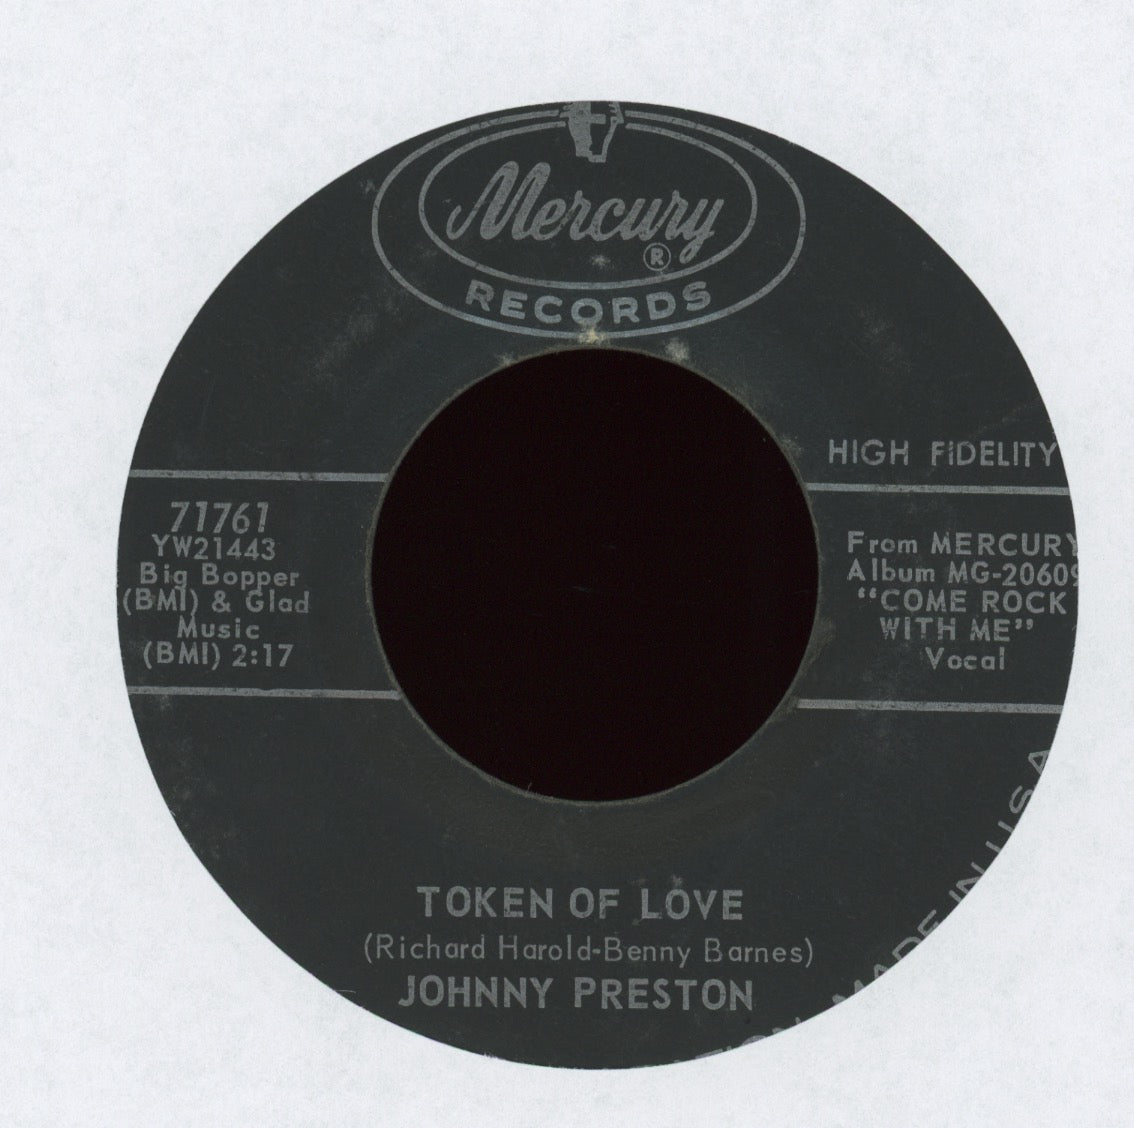 Johnny Preston - Leave My Kitten Alone on Mercury